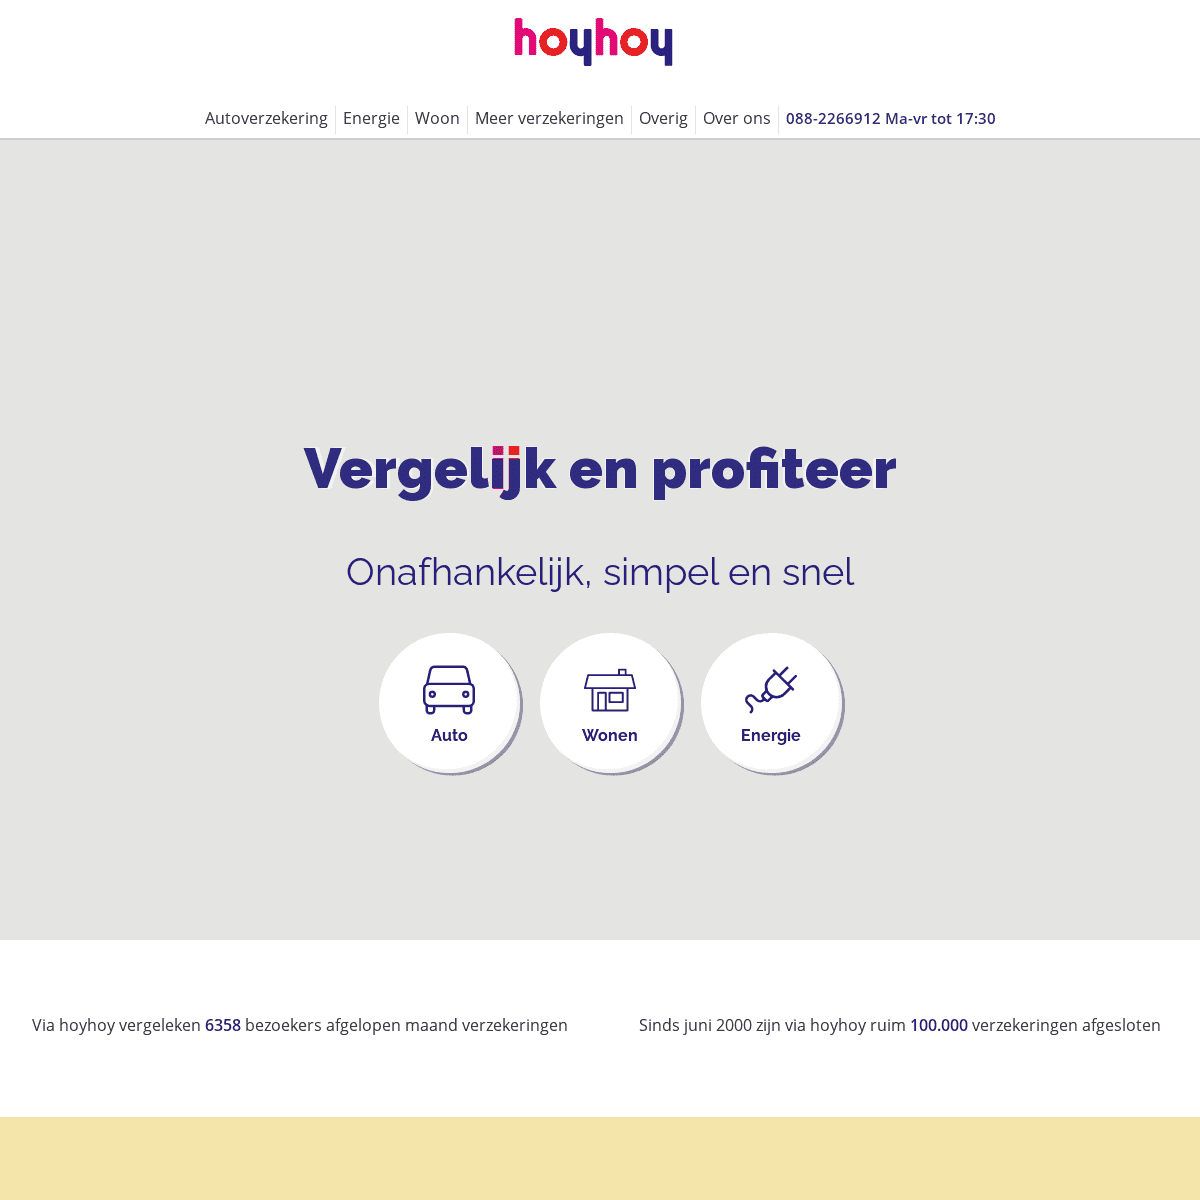 A complete backup of https://hoyhoy.nl